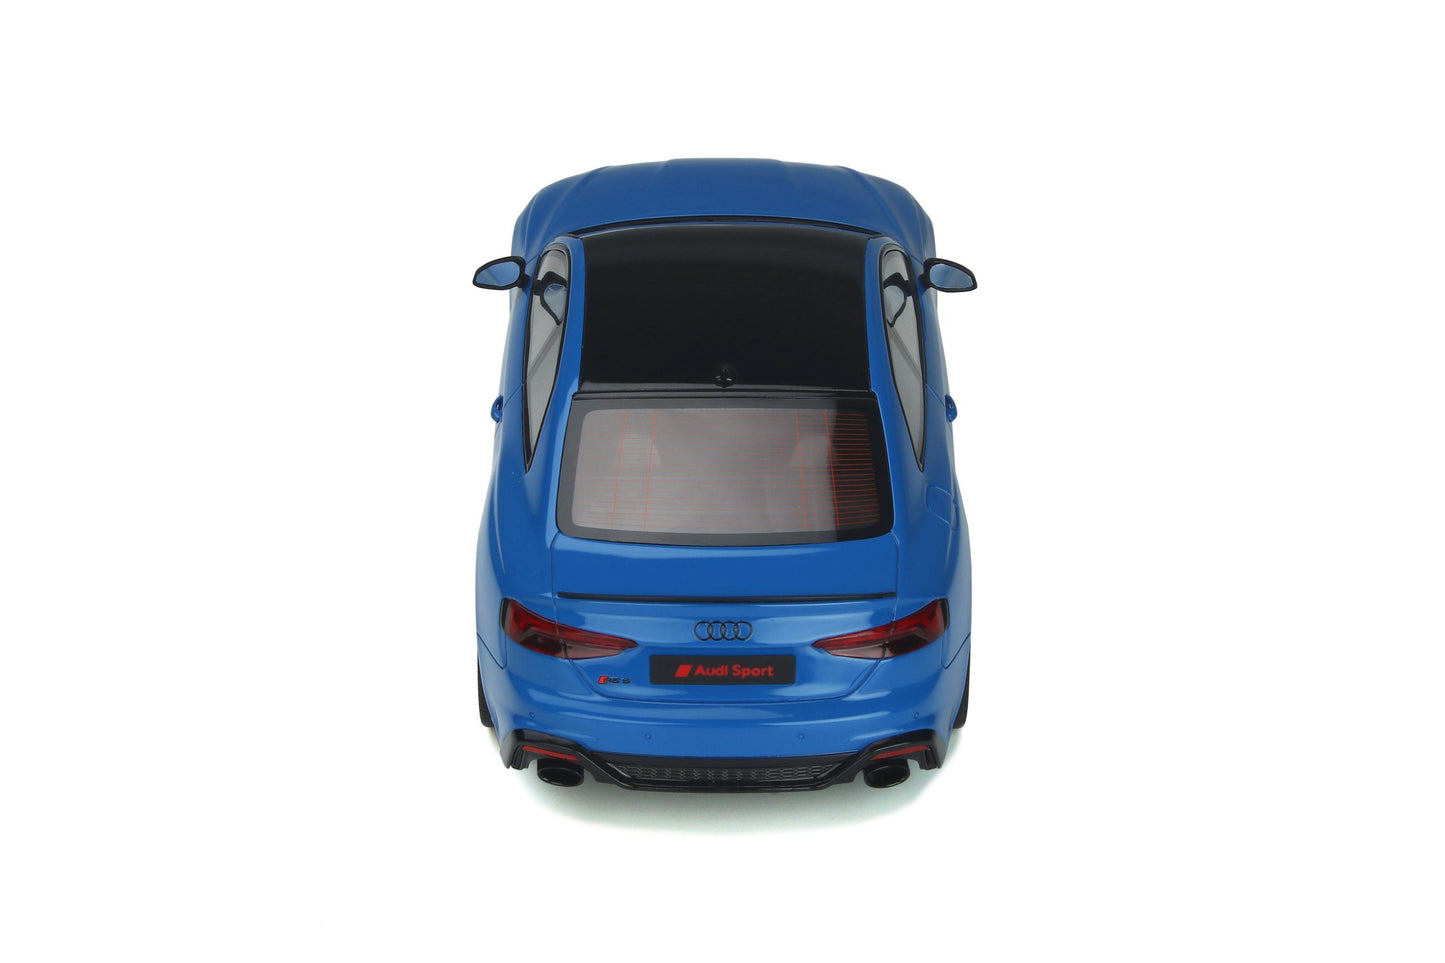 GT Spirit - Audi RS5 Coupe (Turbo Blue) 1:18 Scale Model Car